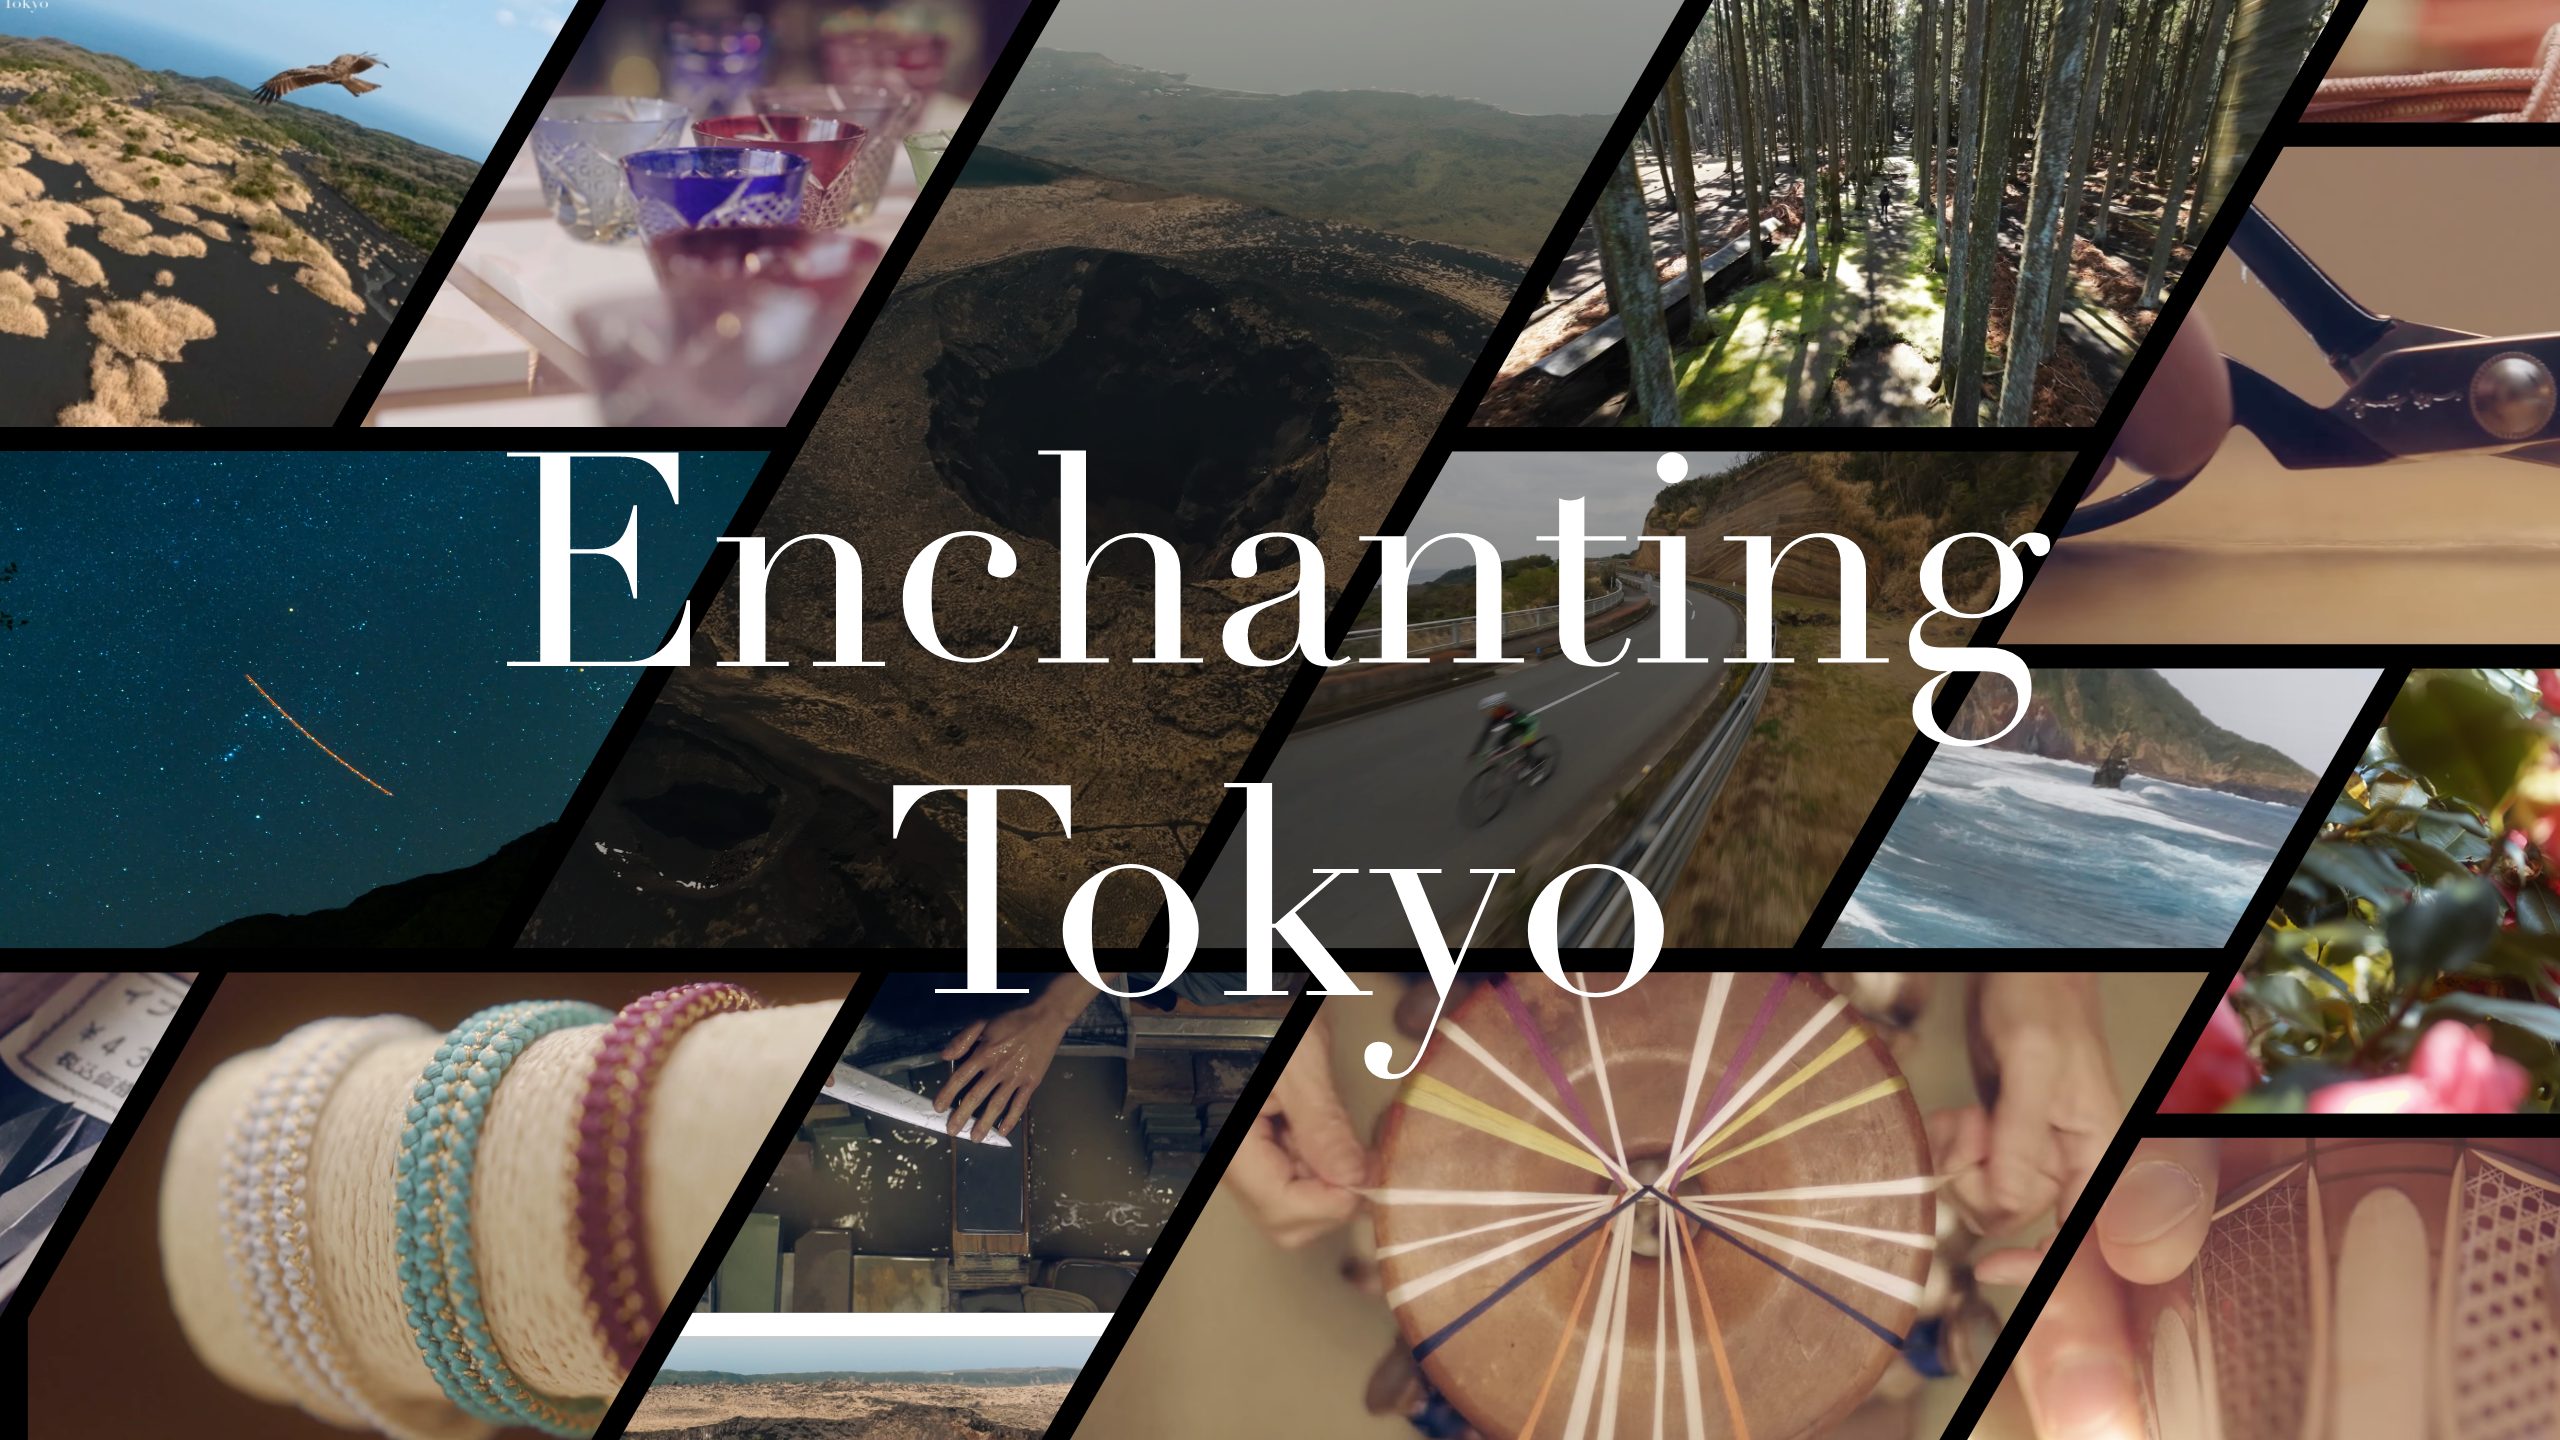 Enchanting Tokyo - 東京の魅力を動画でお届け